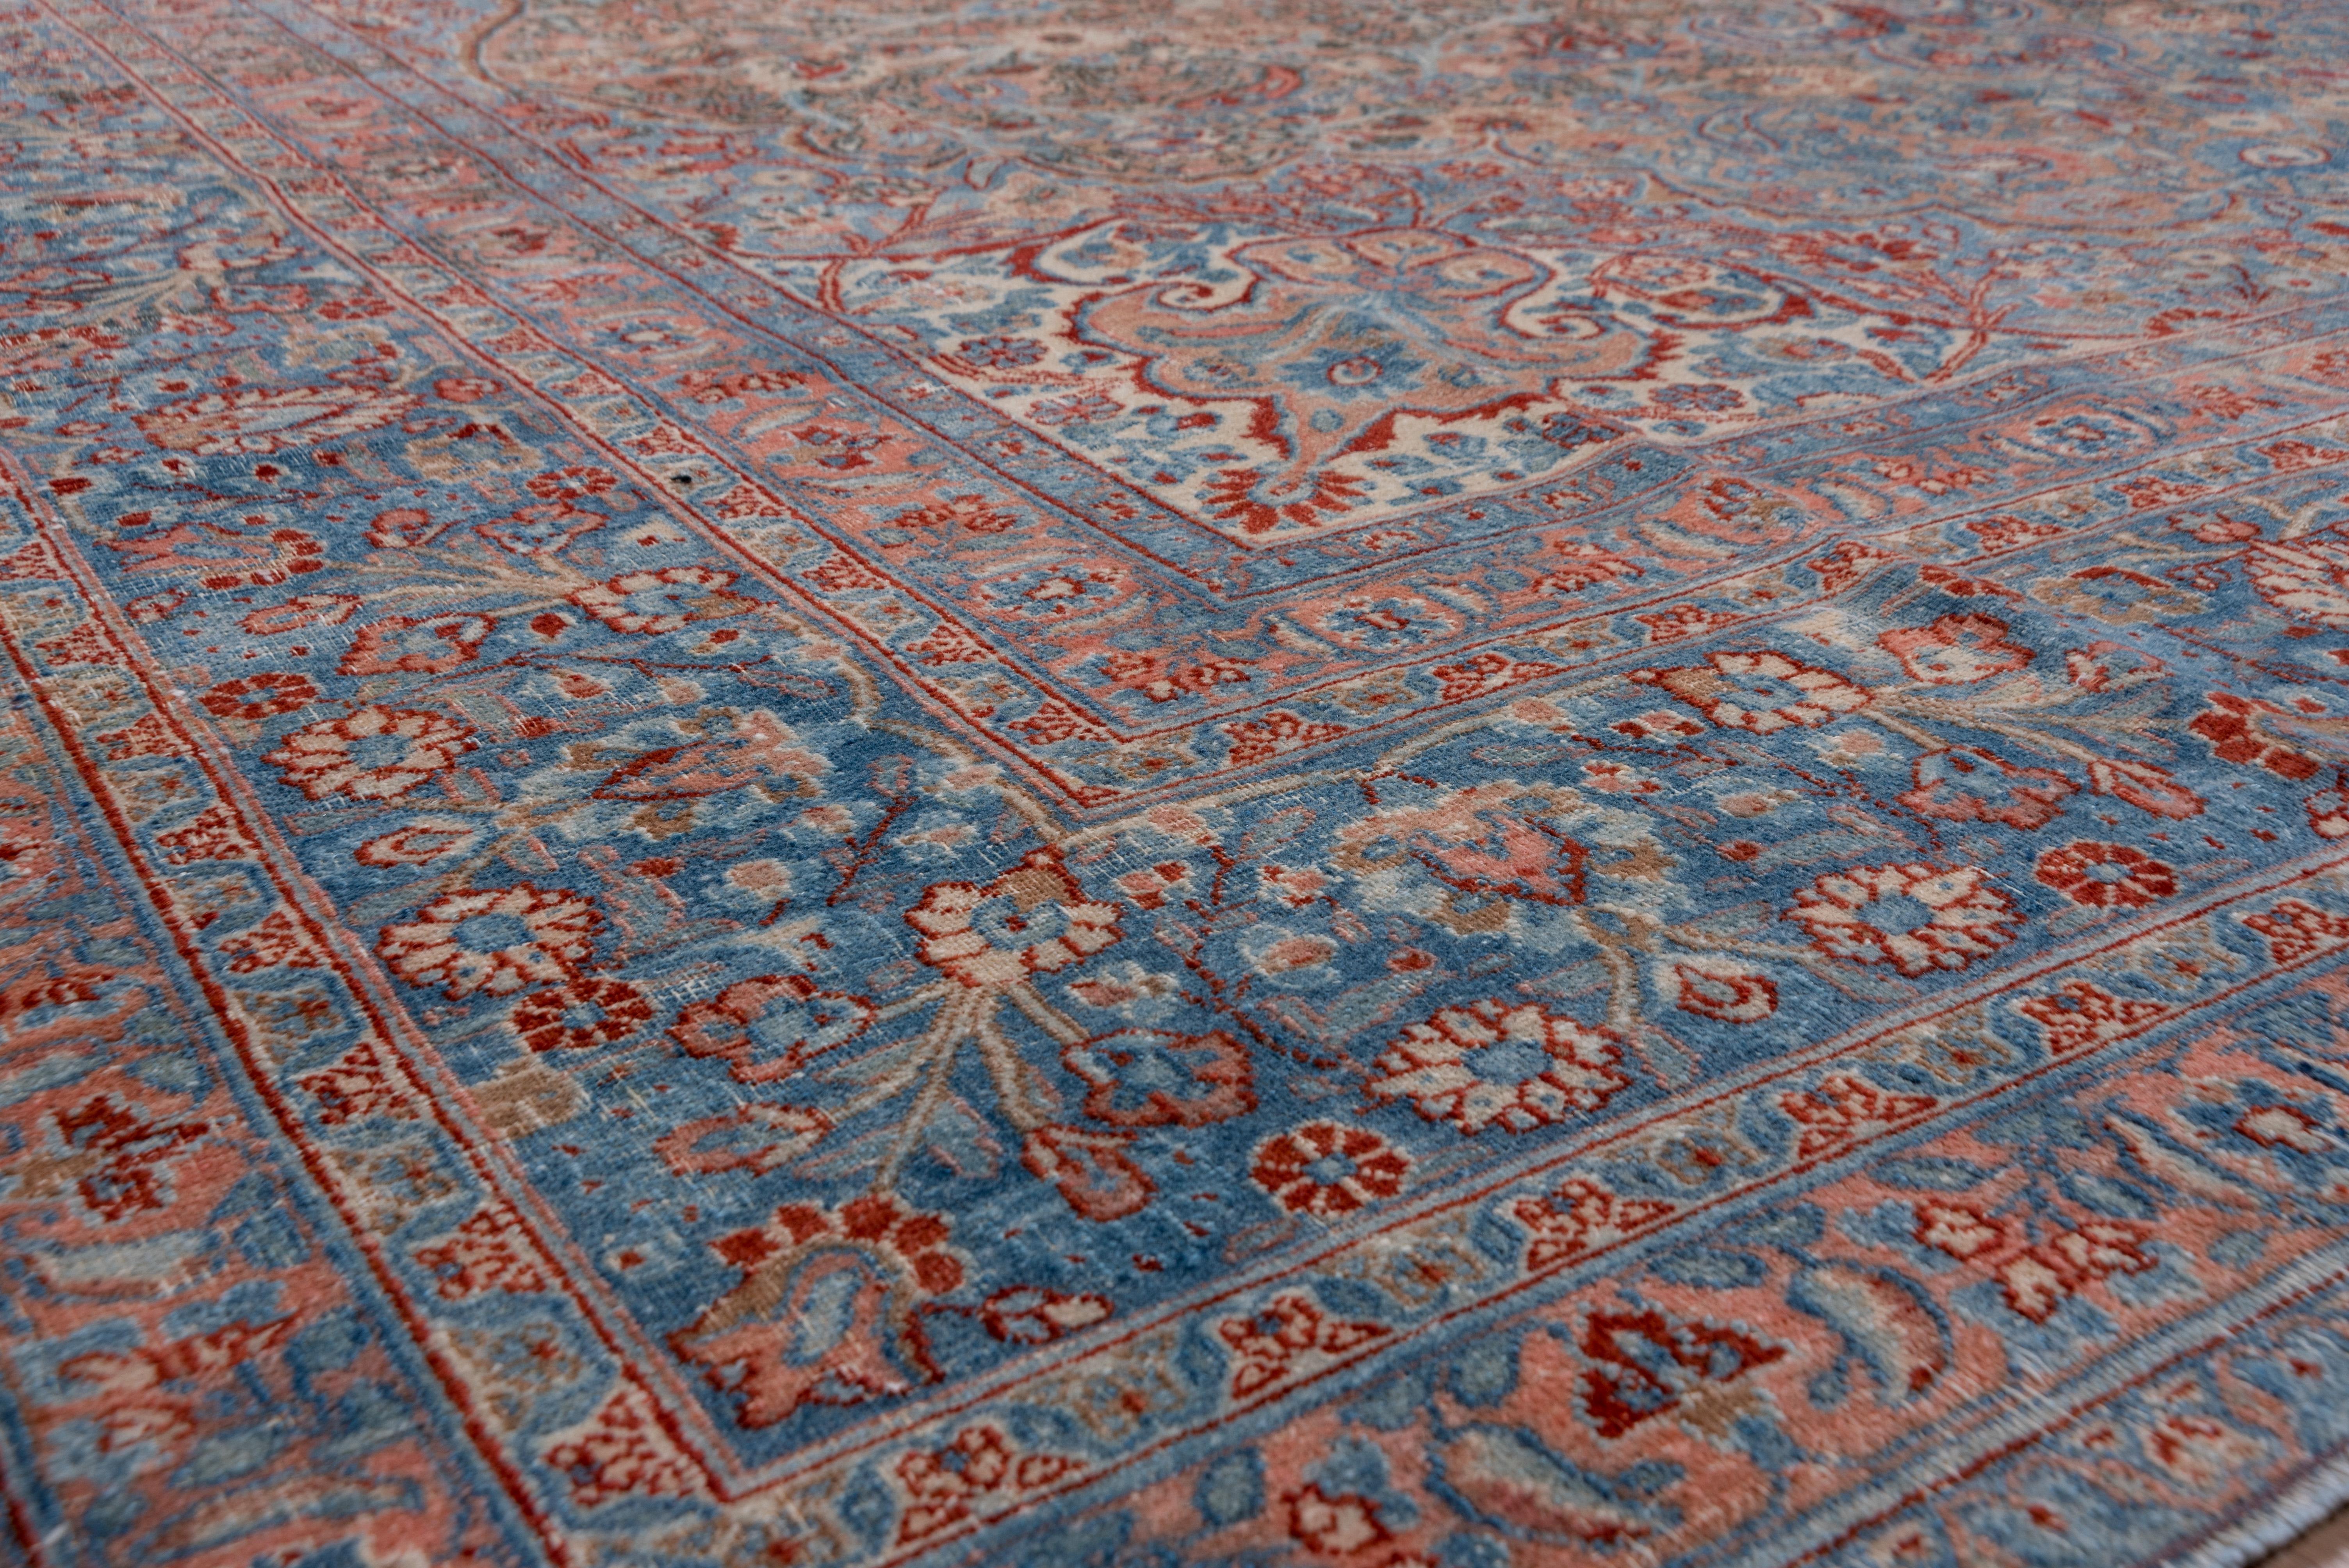 Hand-Knotted Antique Persian Khorassan Carpet, Blue Tones, Pink Tones, Salmon Tones For Sale